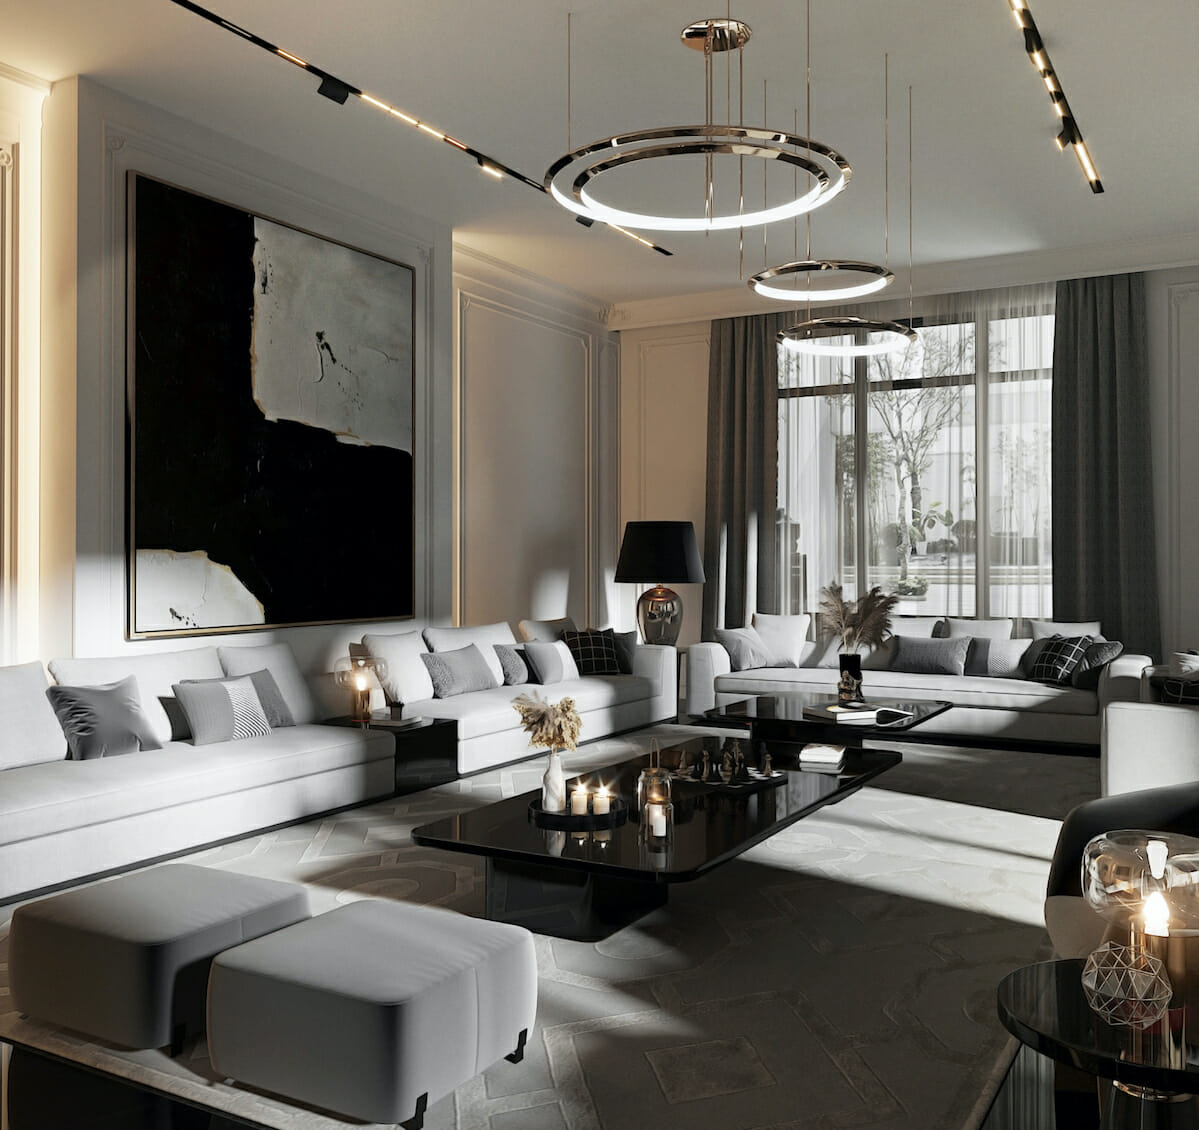 Black and white modern house interior by decorilla designer, Nathalie I.